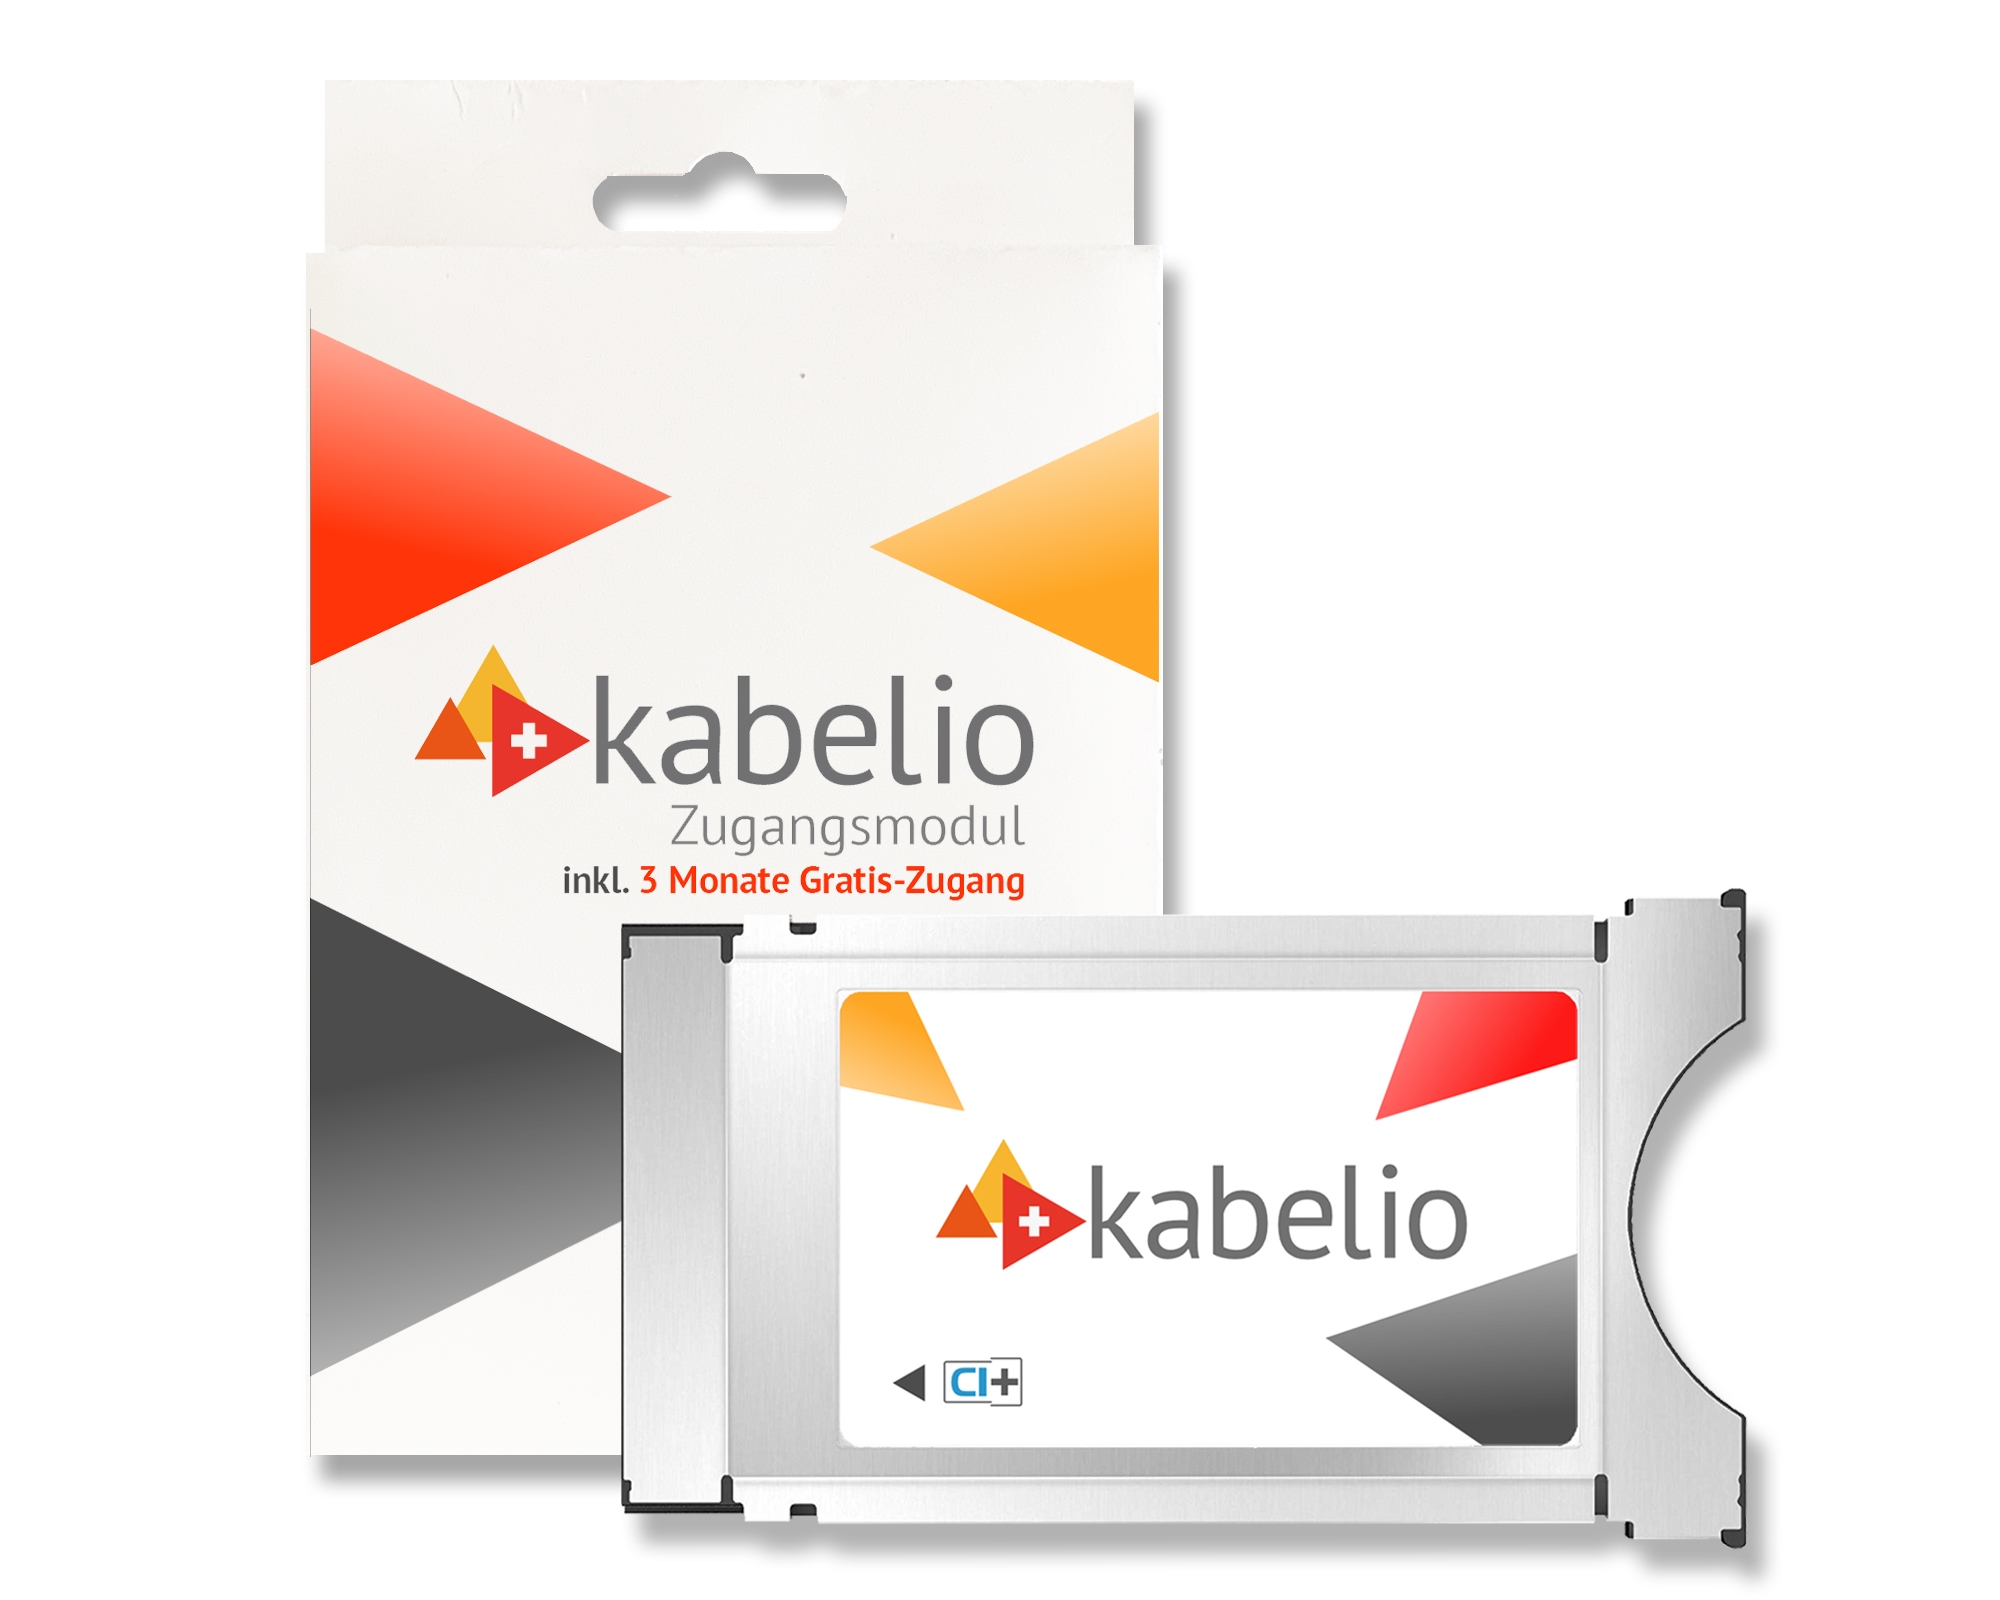 Kabelio CI+ Zugangsmodul inkl. 3 Monate Gratis-Zugang für SAT